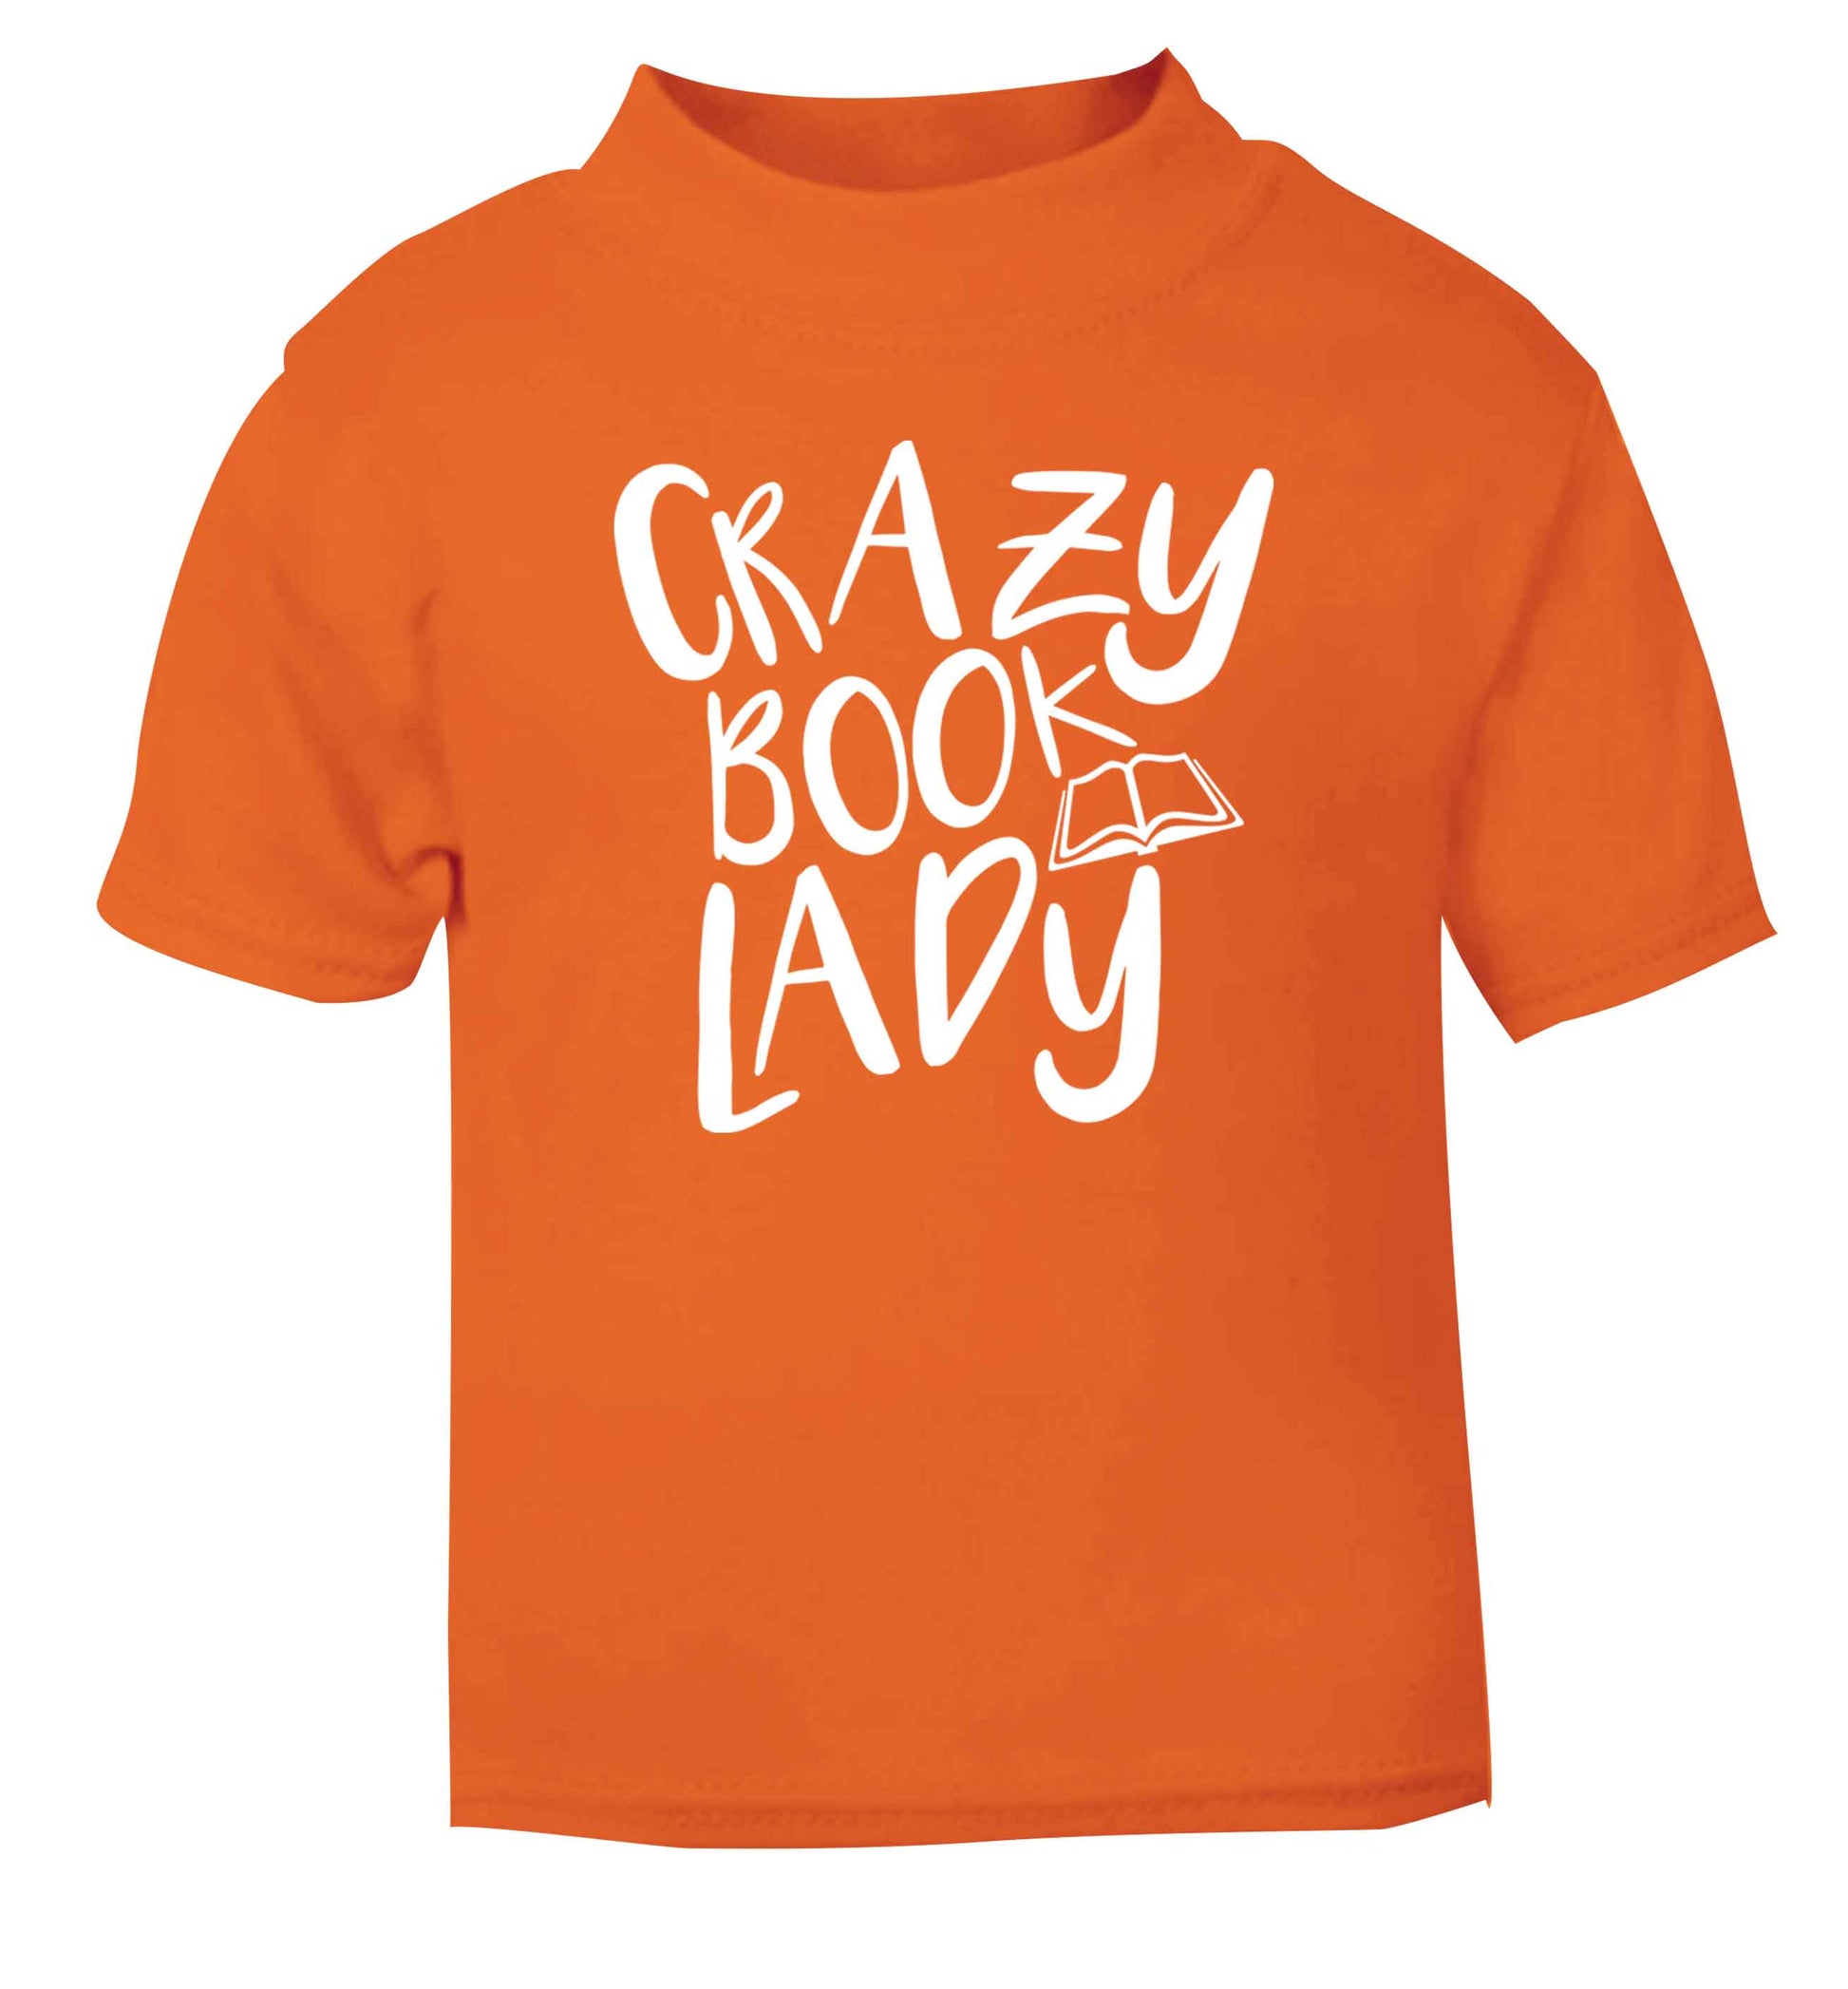 Crazy book lady orange Baby Toddler Tshirt 2 Years